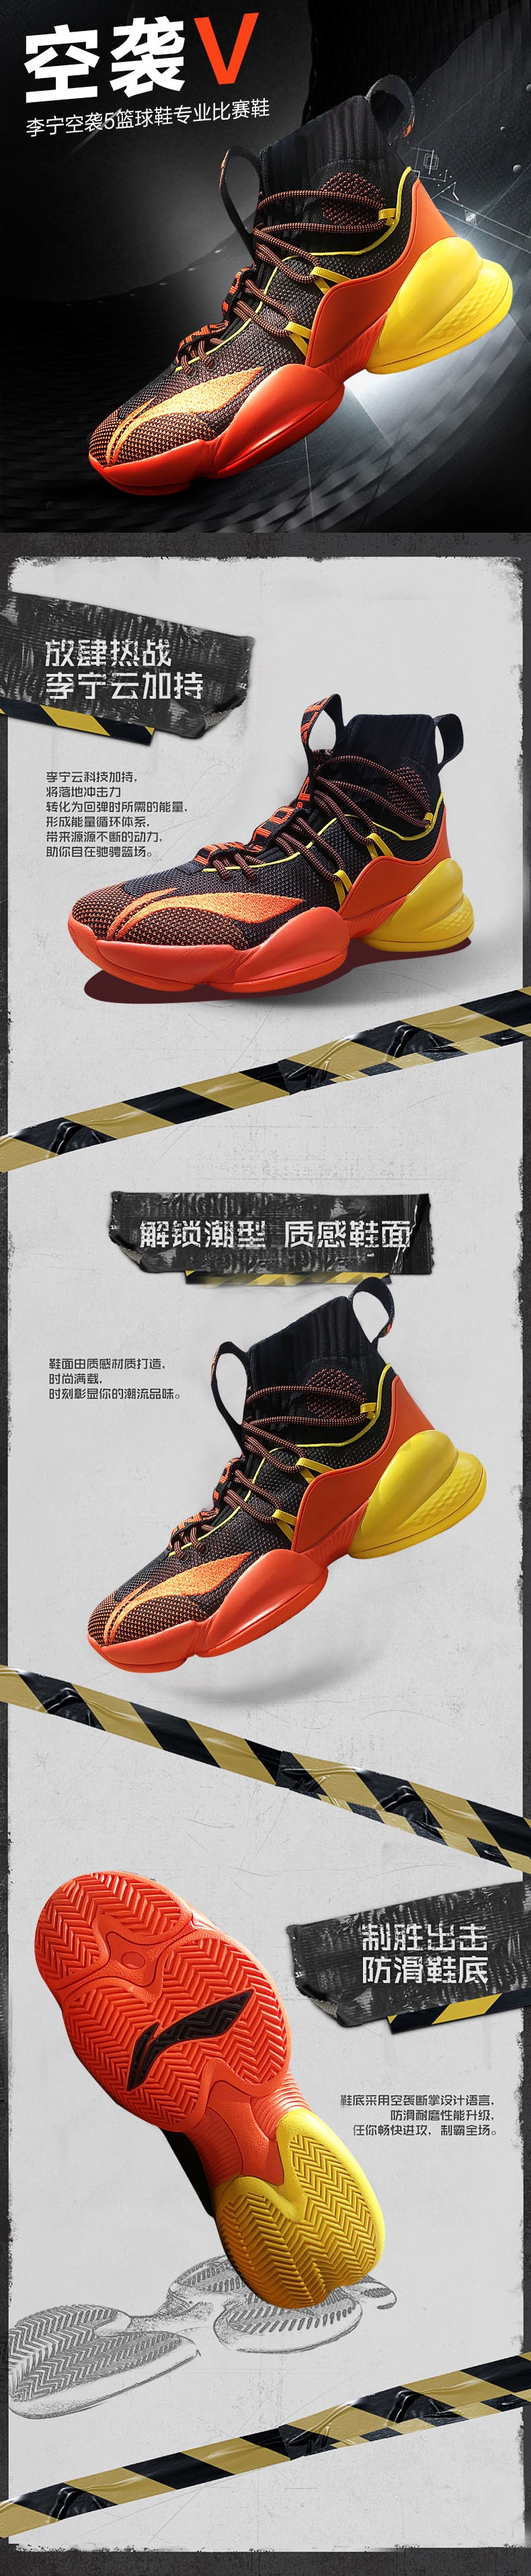 Li-Ning 2019 Power VI Men's High tops Bounse Basketball Sock-like Game Shoes - Black/Orange